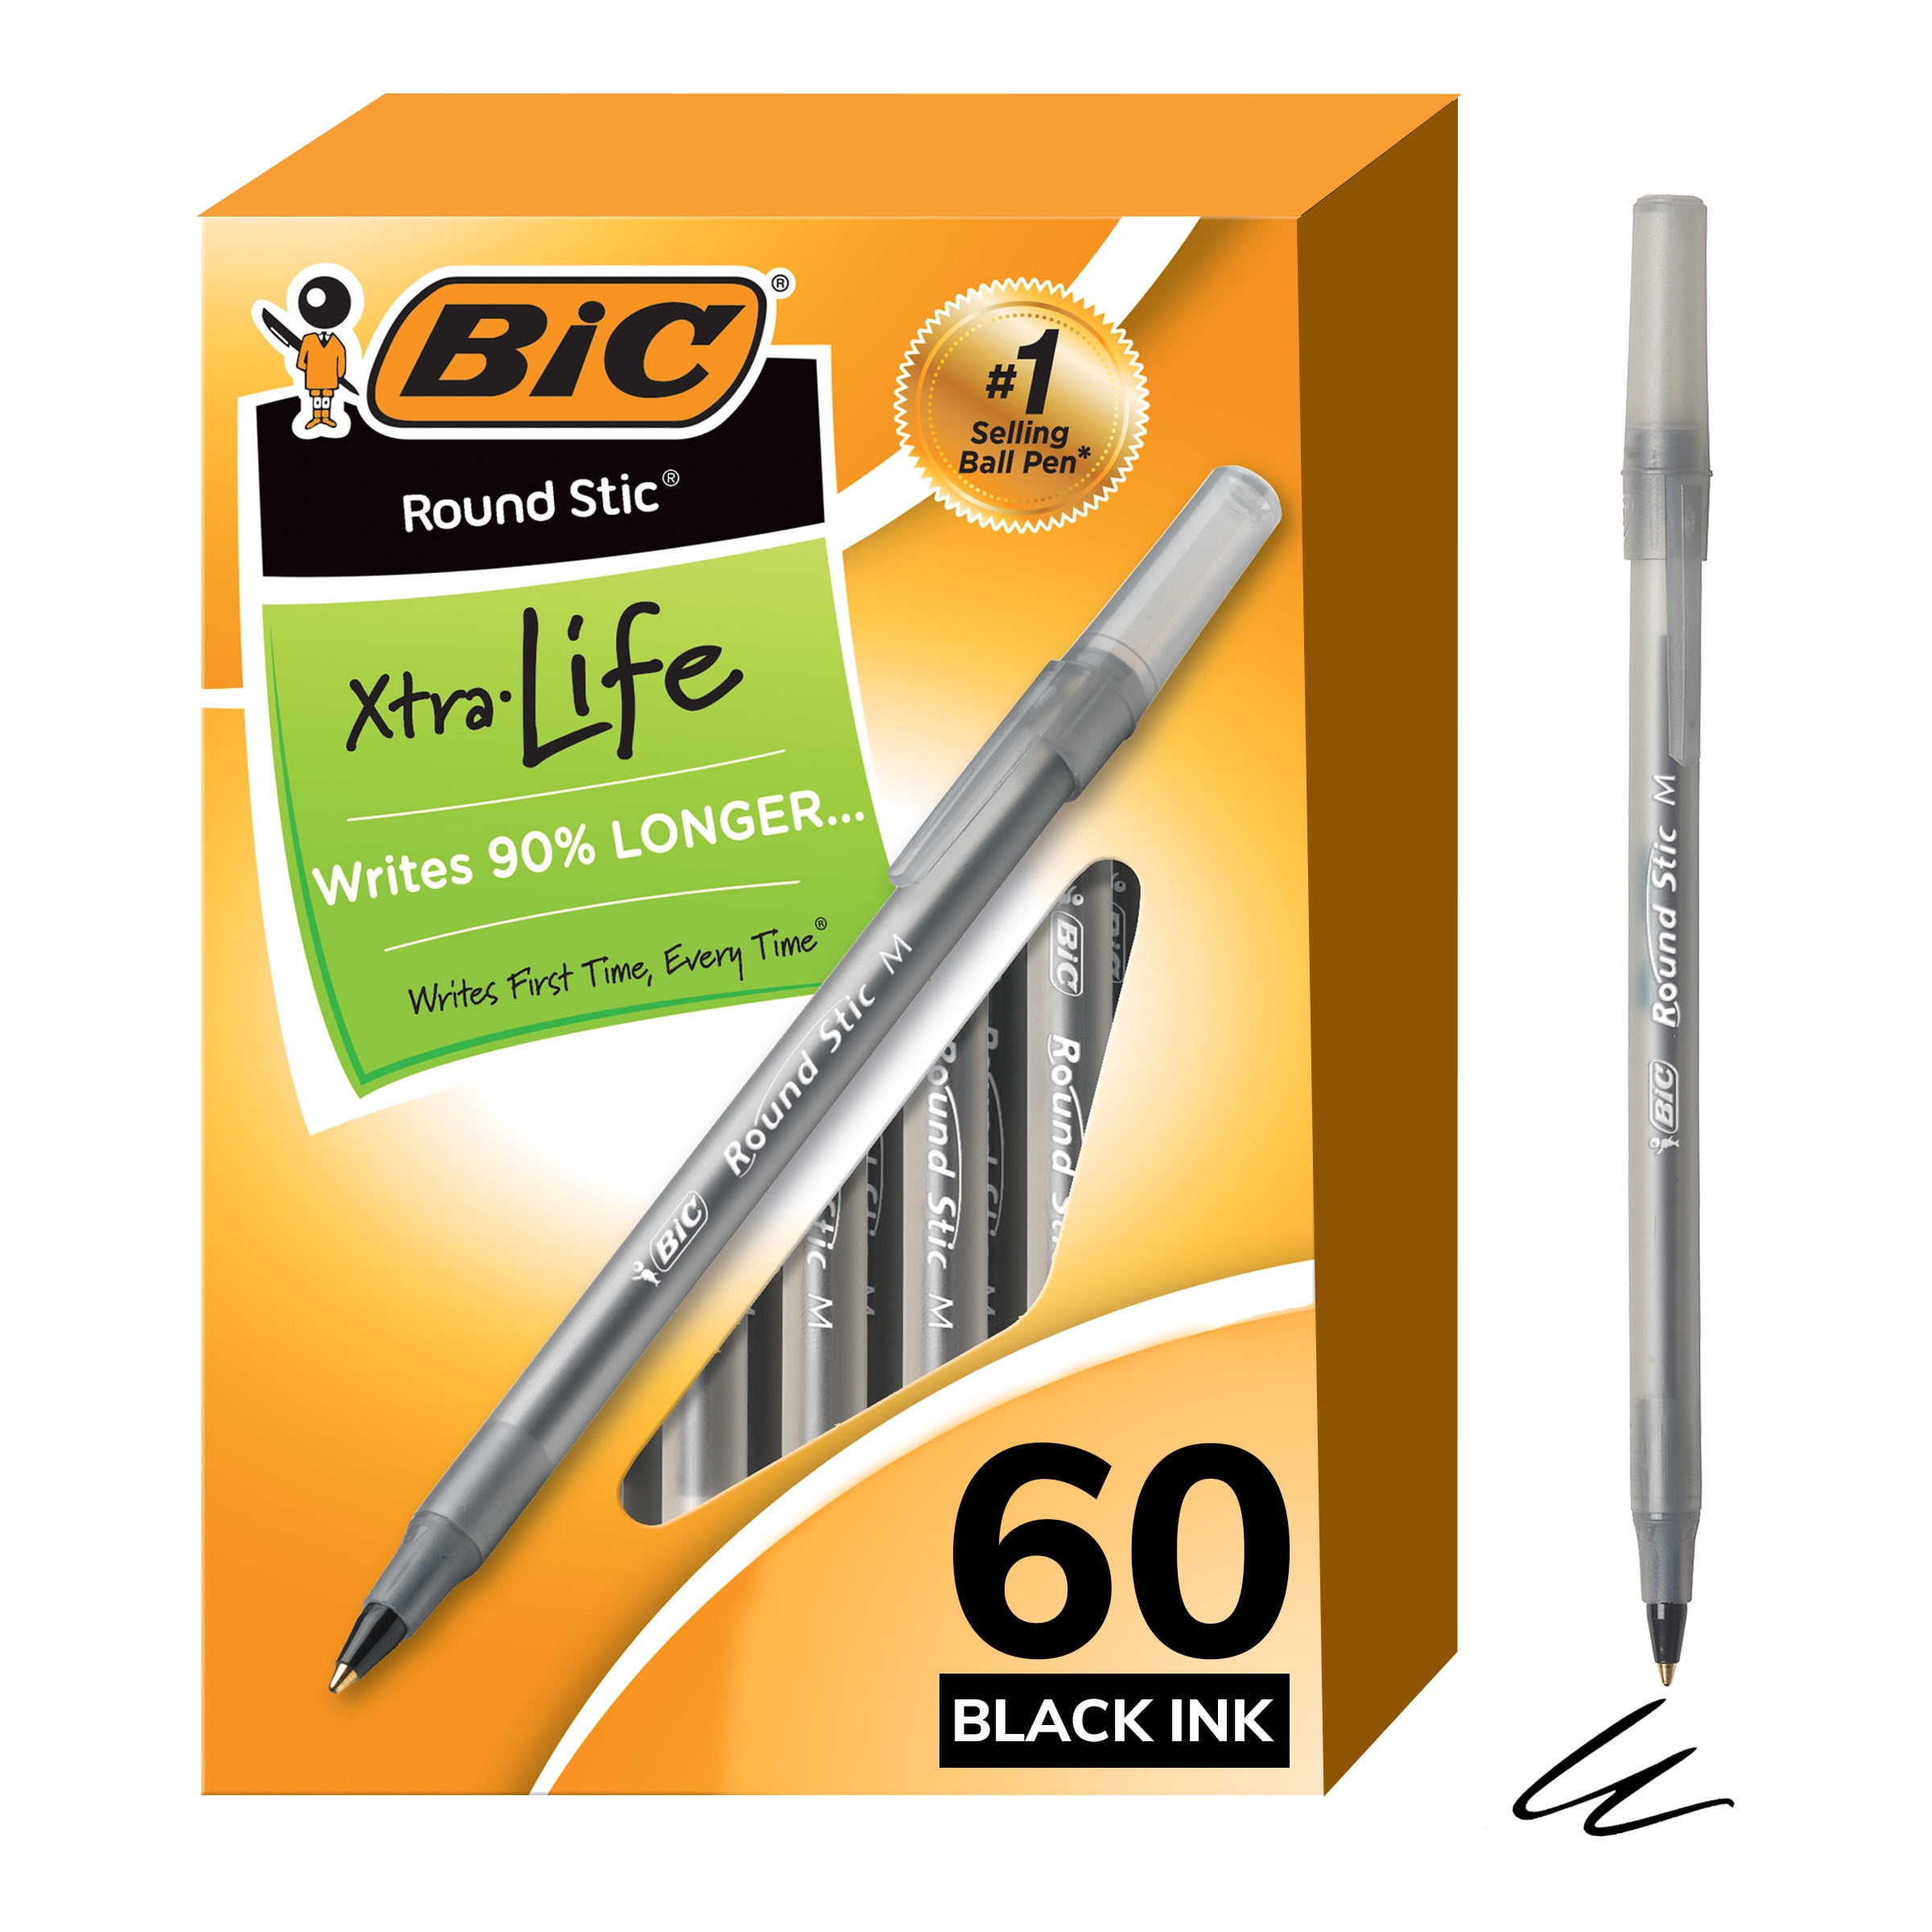 BIC Round Stic Xtra Life Ballpoint Pens, Medium Point (1.0mm), 60 Count, Black Pens